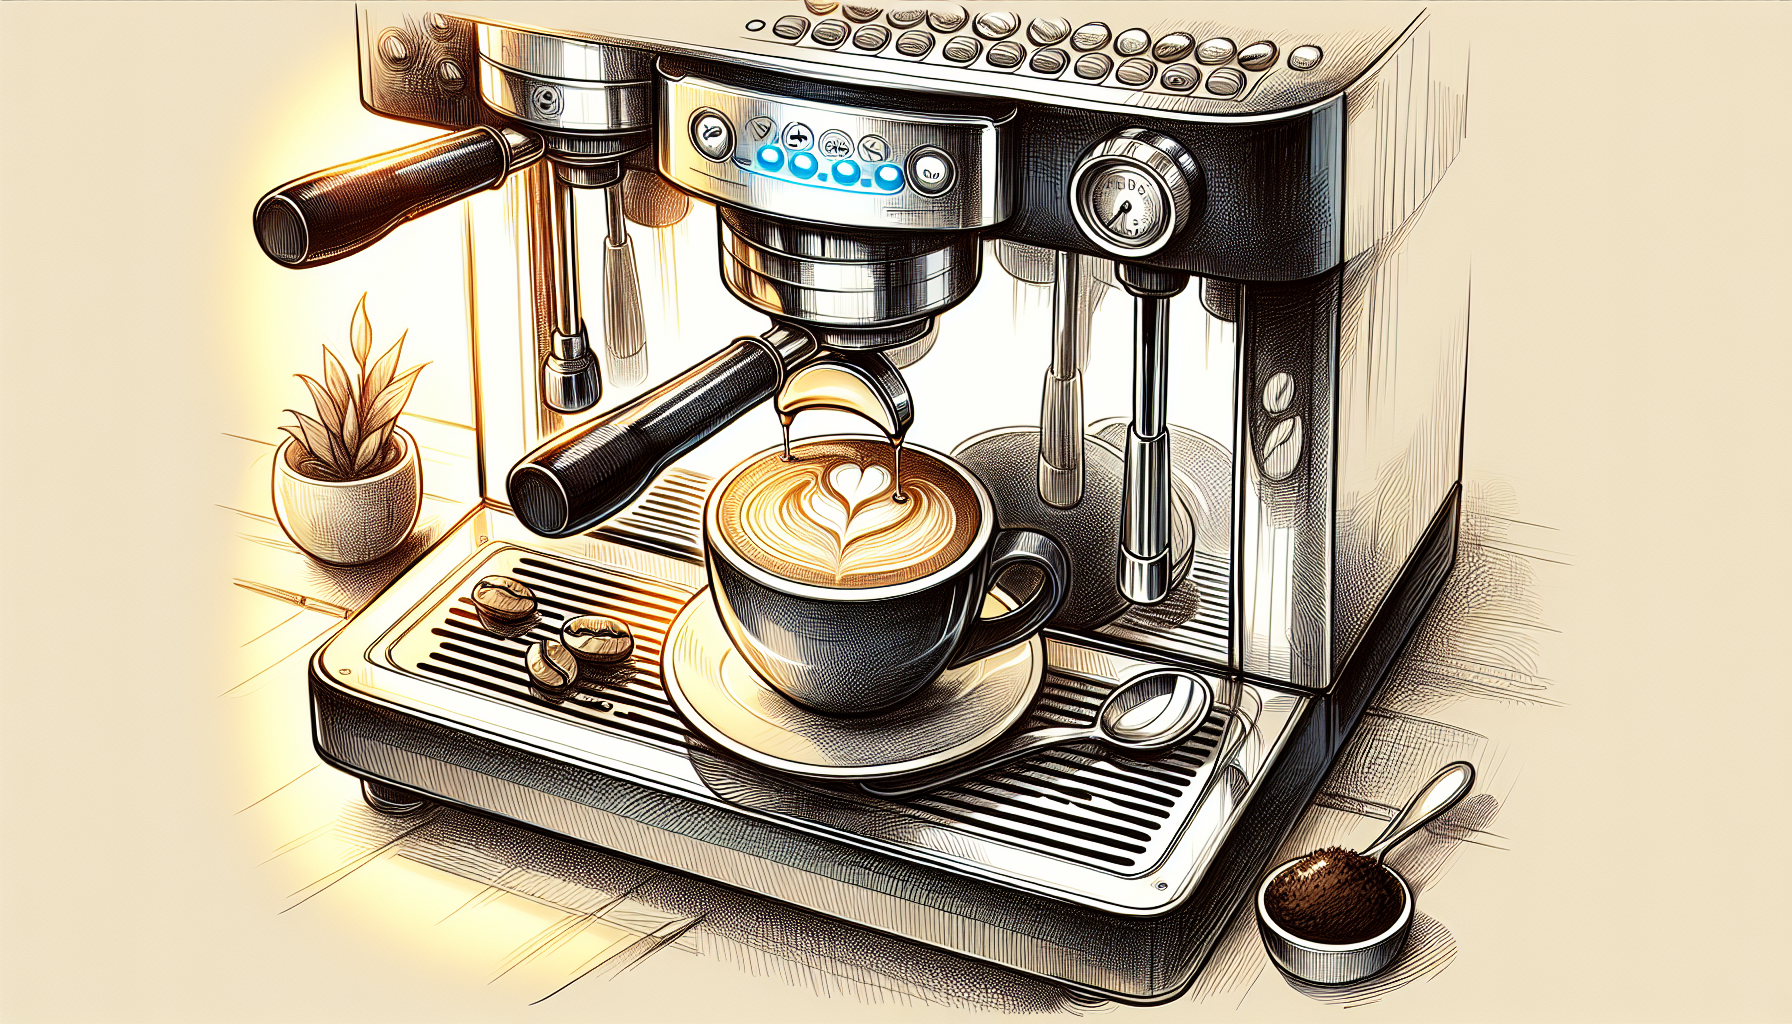 How to Make a Caffe Latte on the Nespresso Creatista Pro Coffee Machine